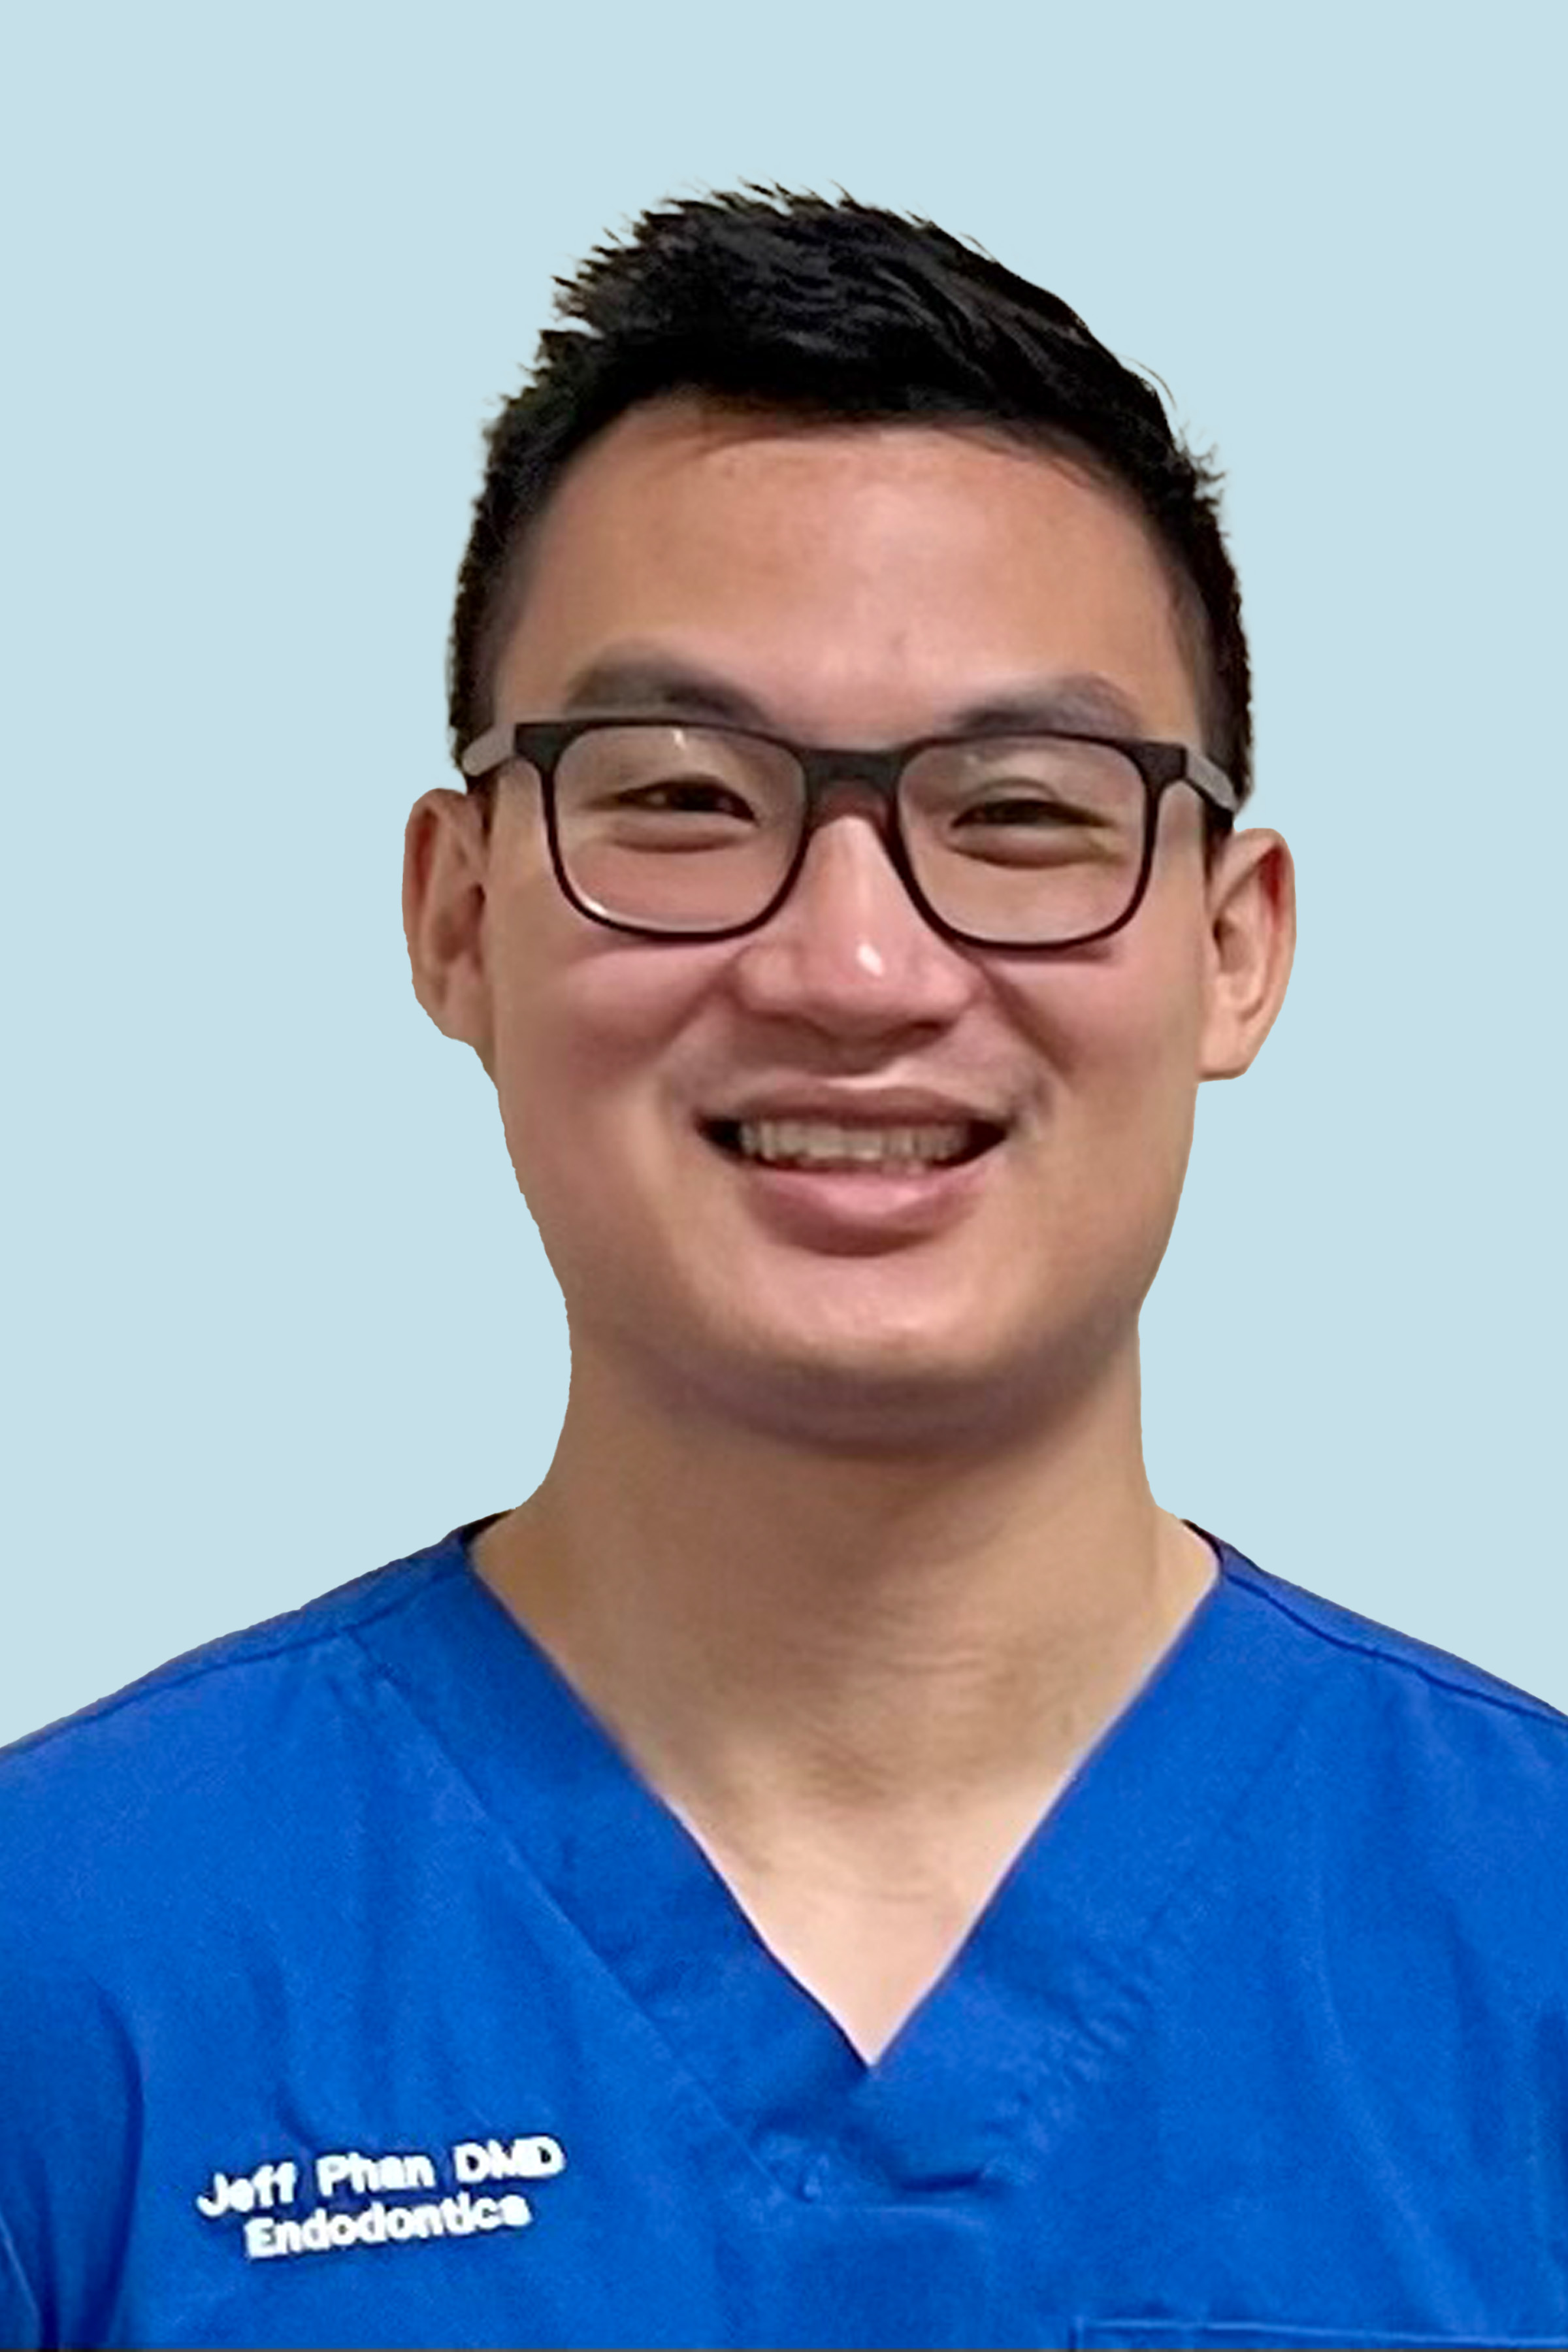 Dr. Jeff Phan